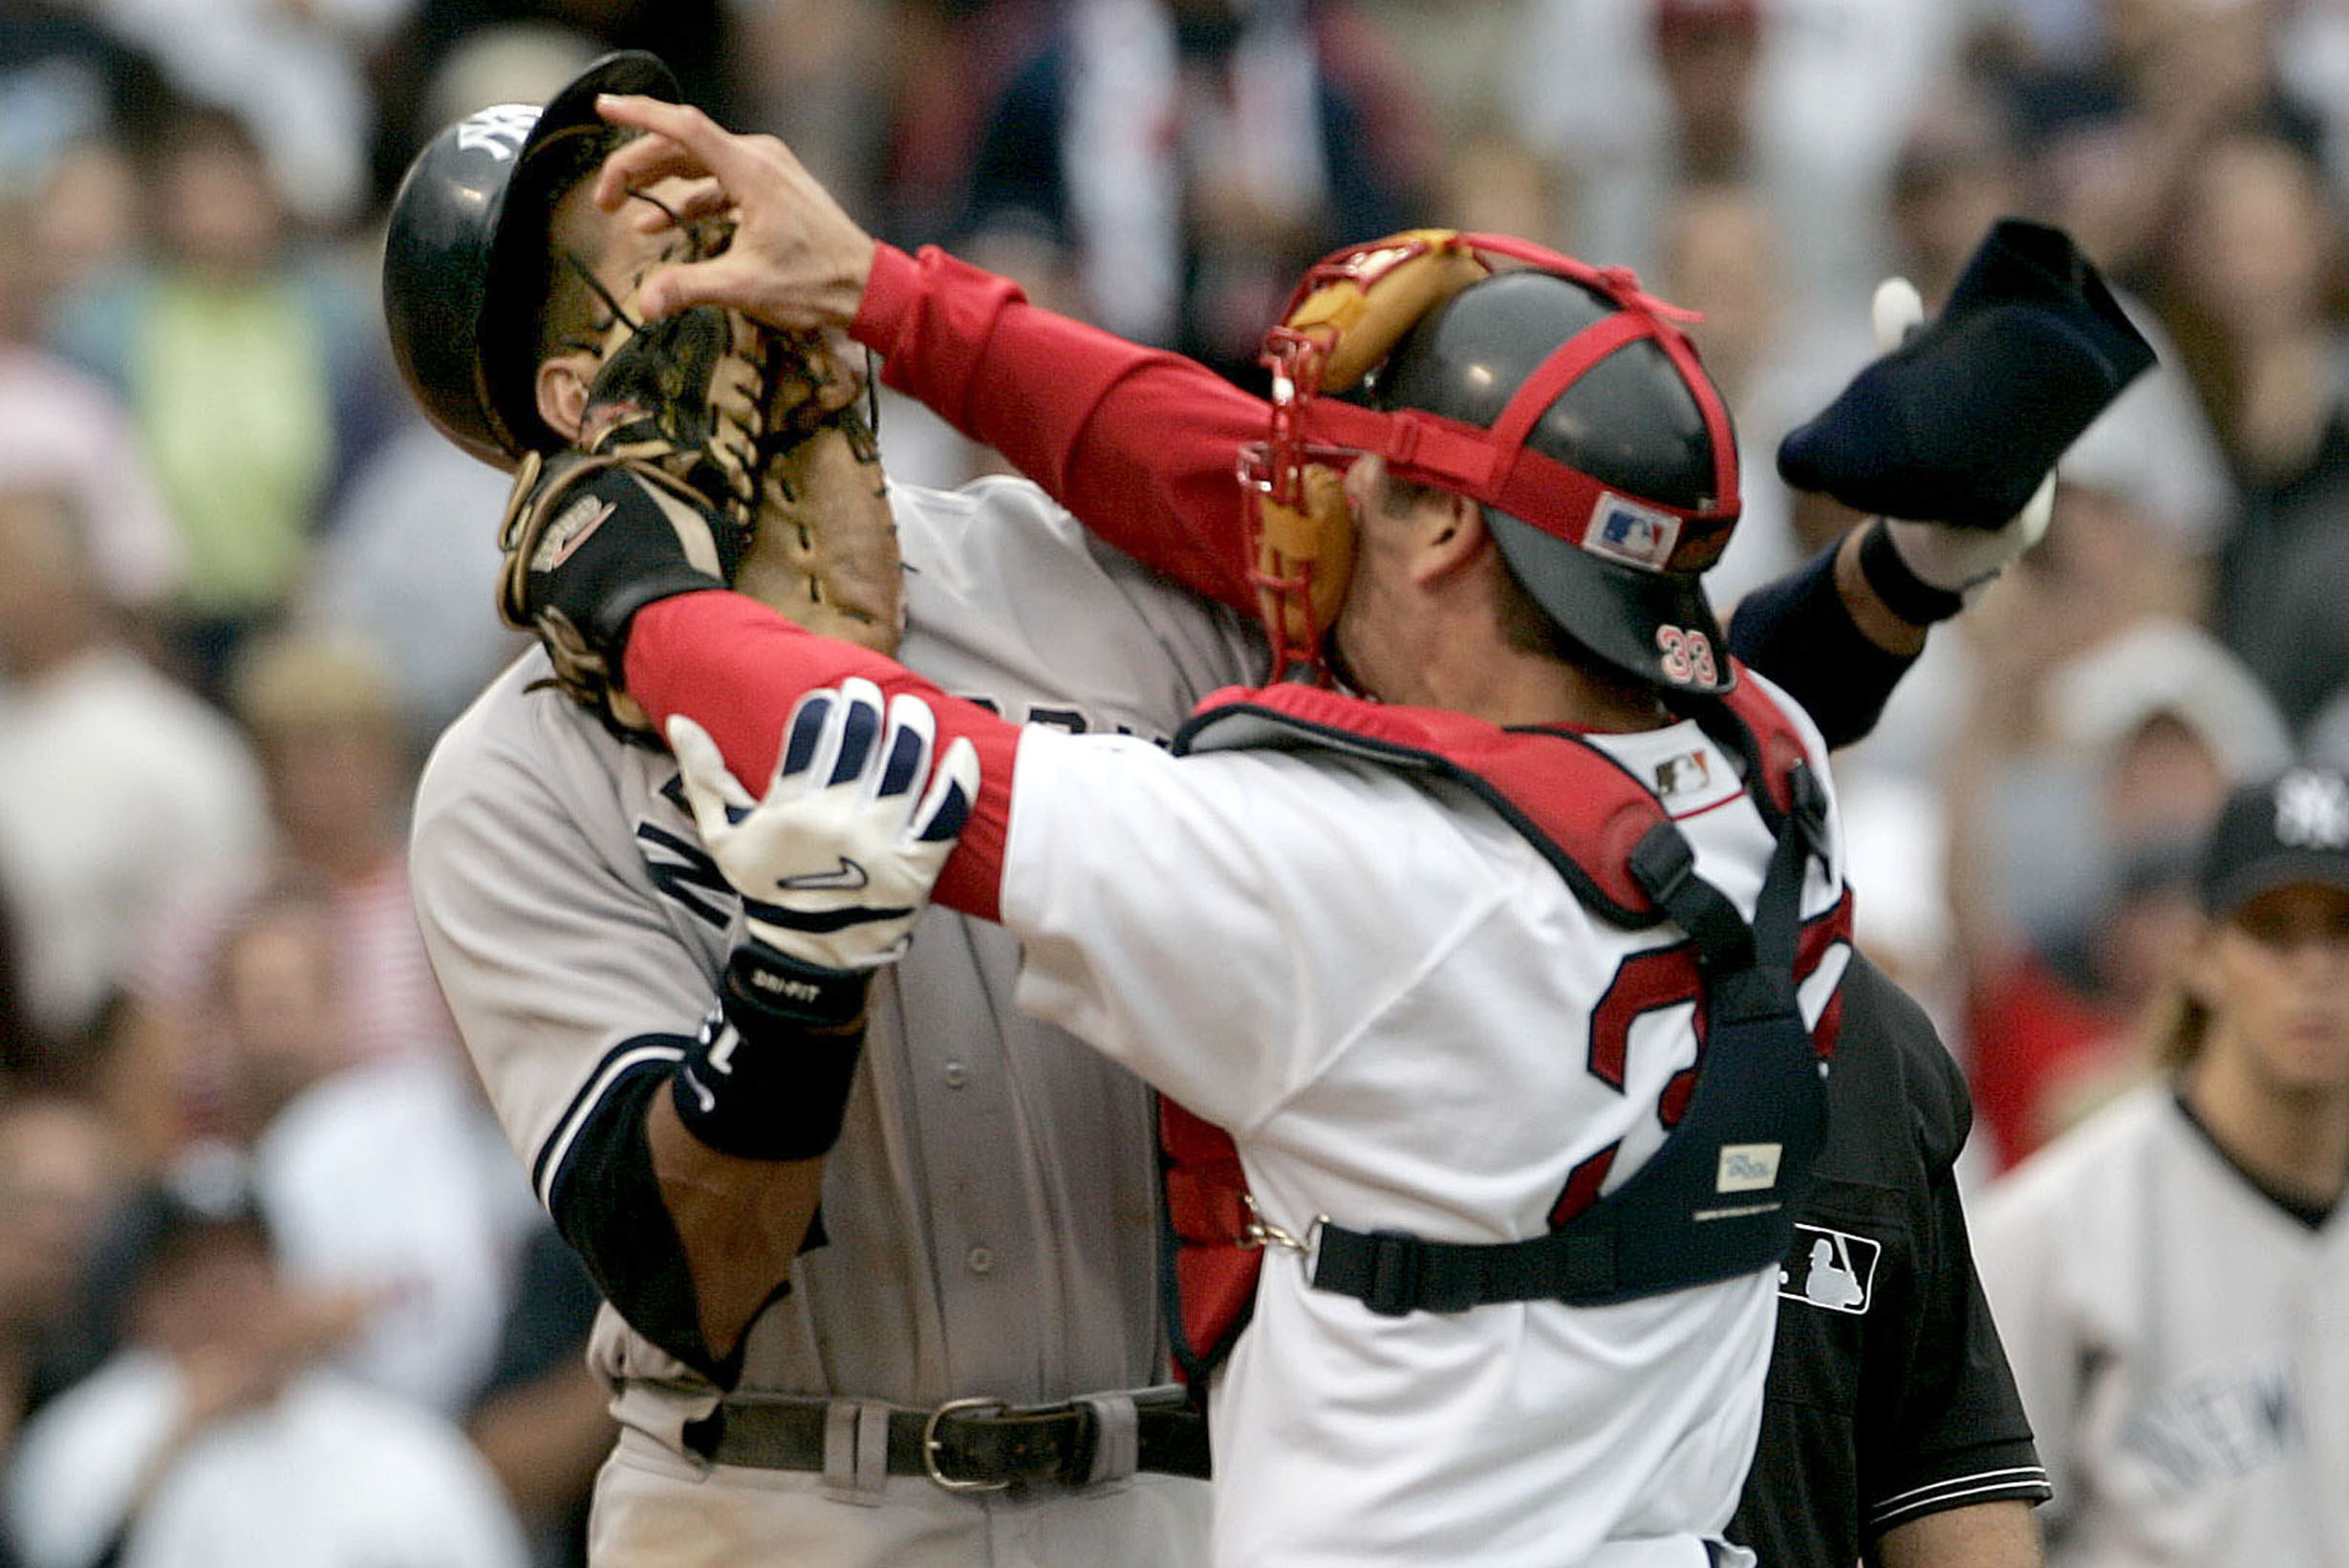 Red Sox-Yankees rivalrygetting insane, but fun